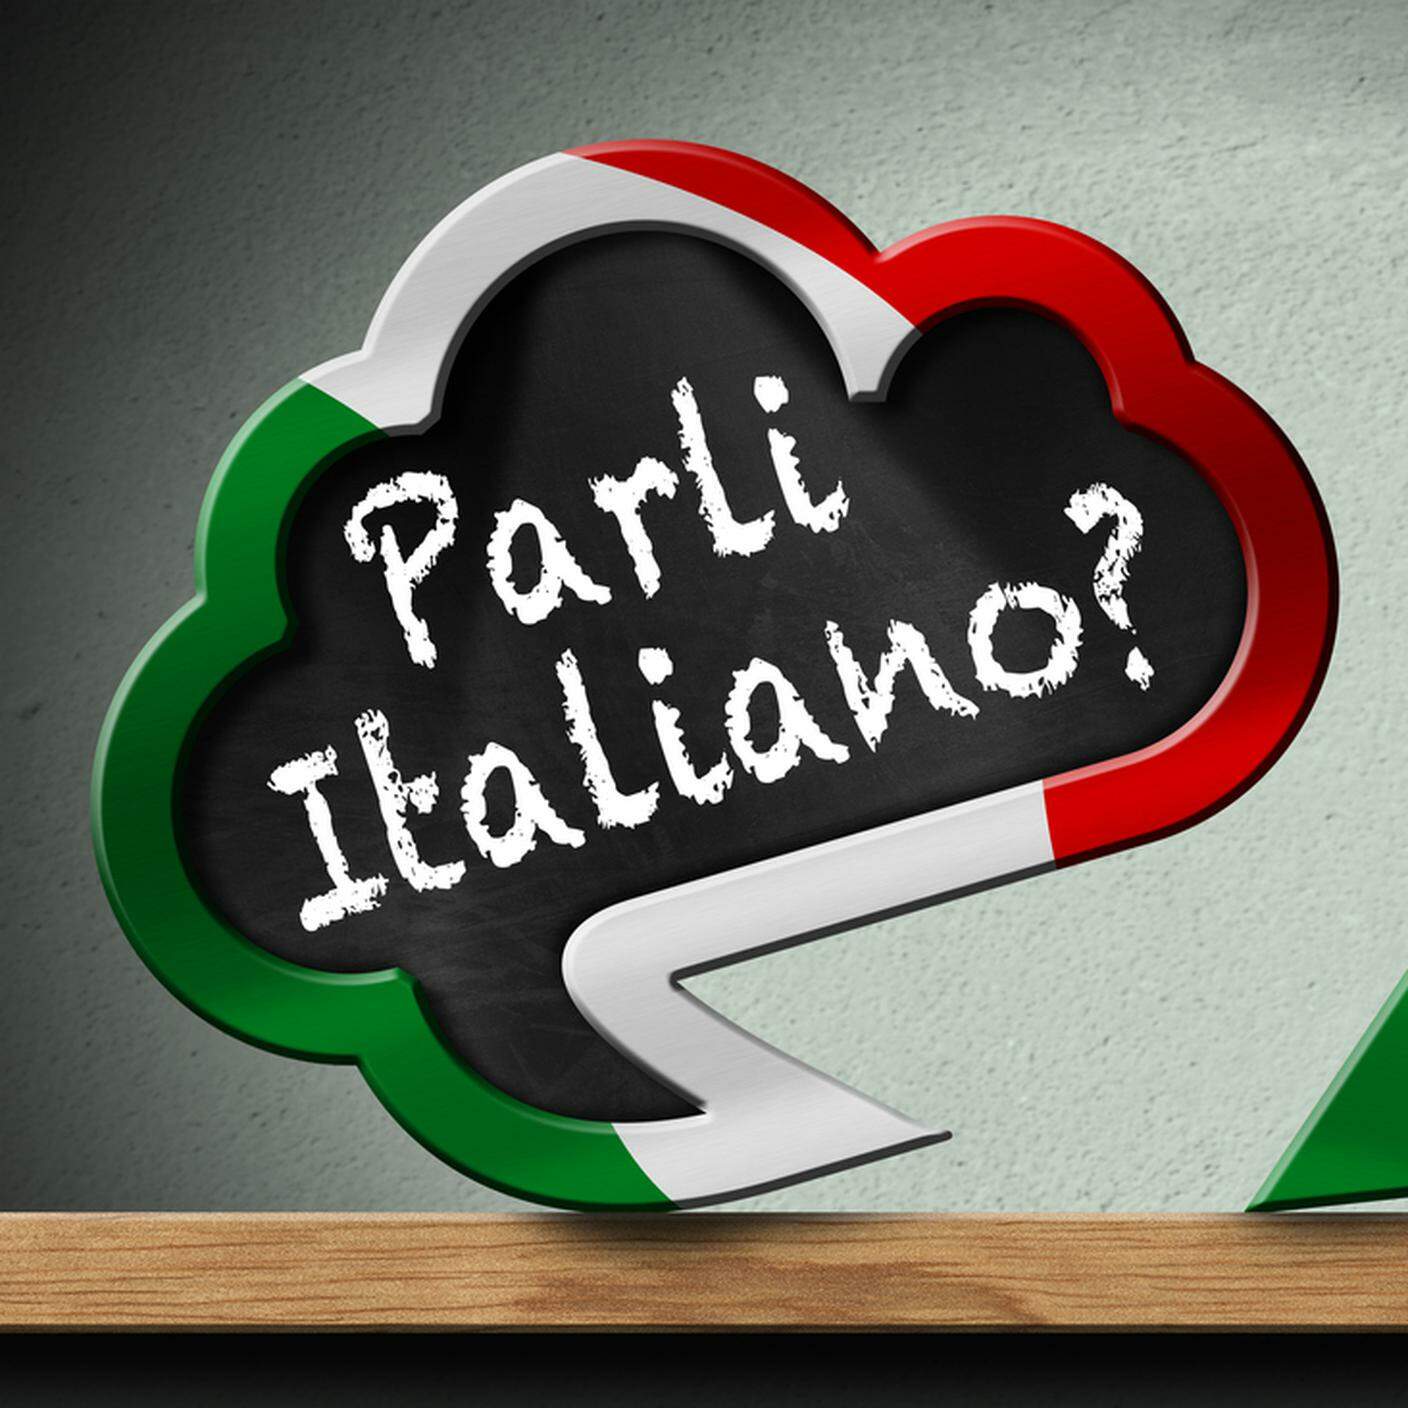 parlare italiano